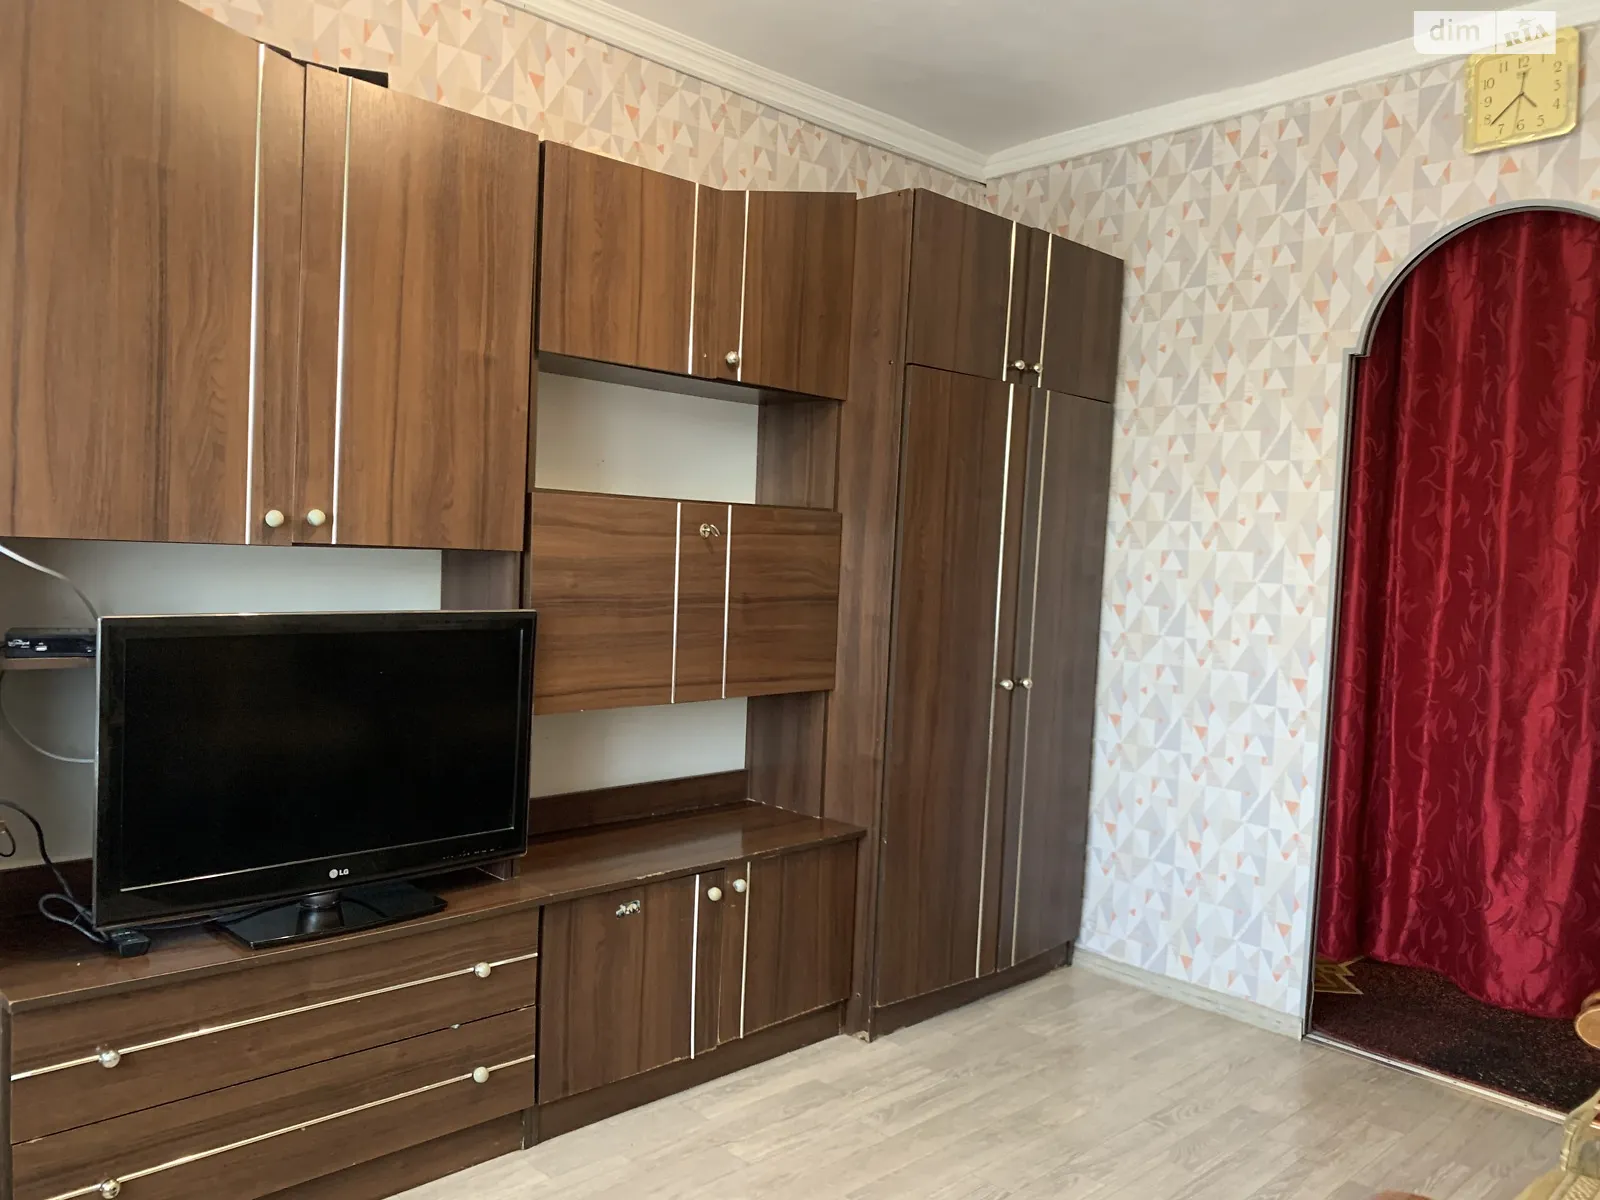 Продается комната 17 кв. м в Тернополе - фото 4